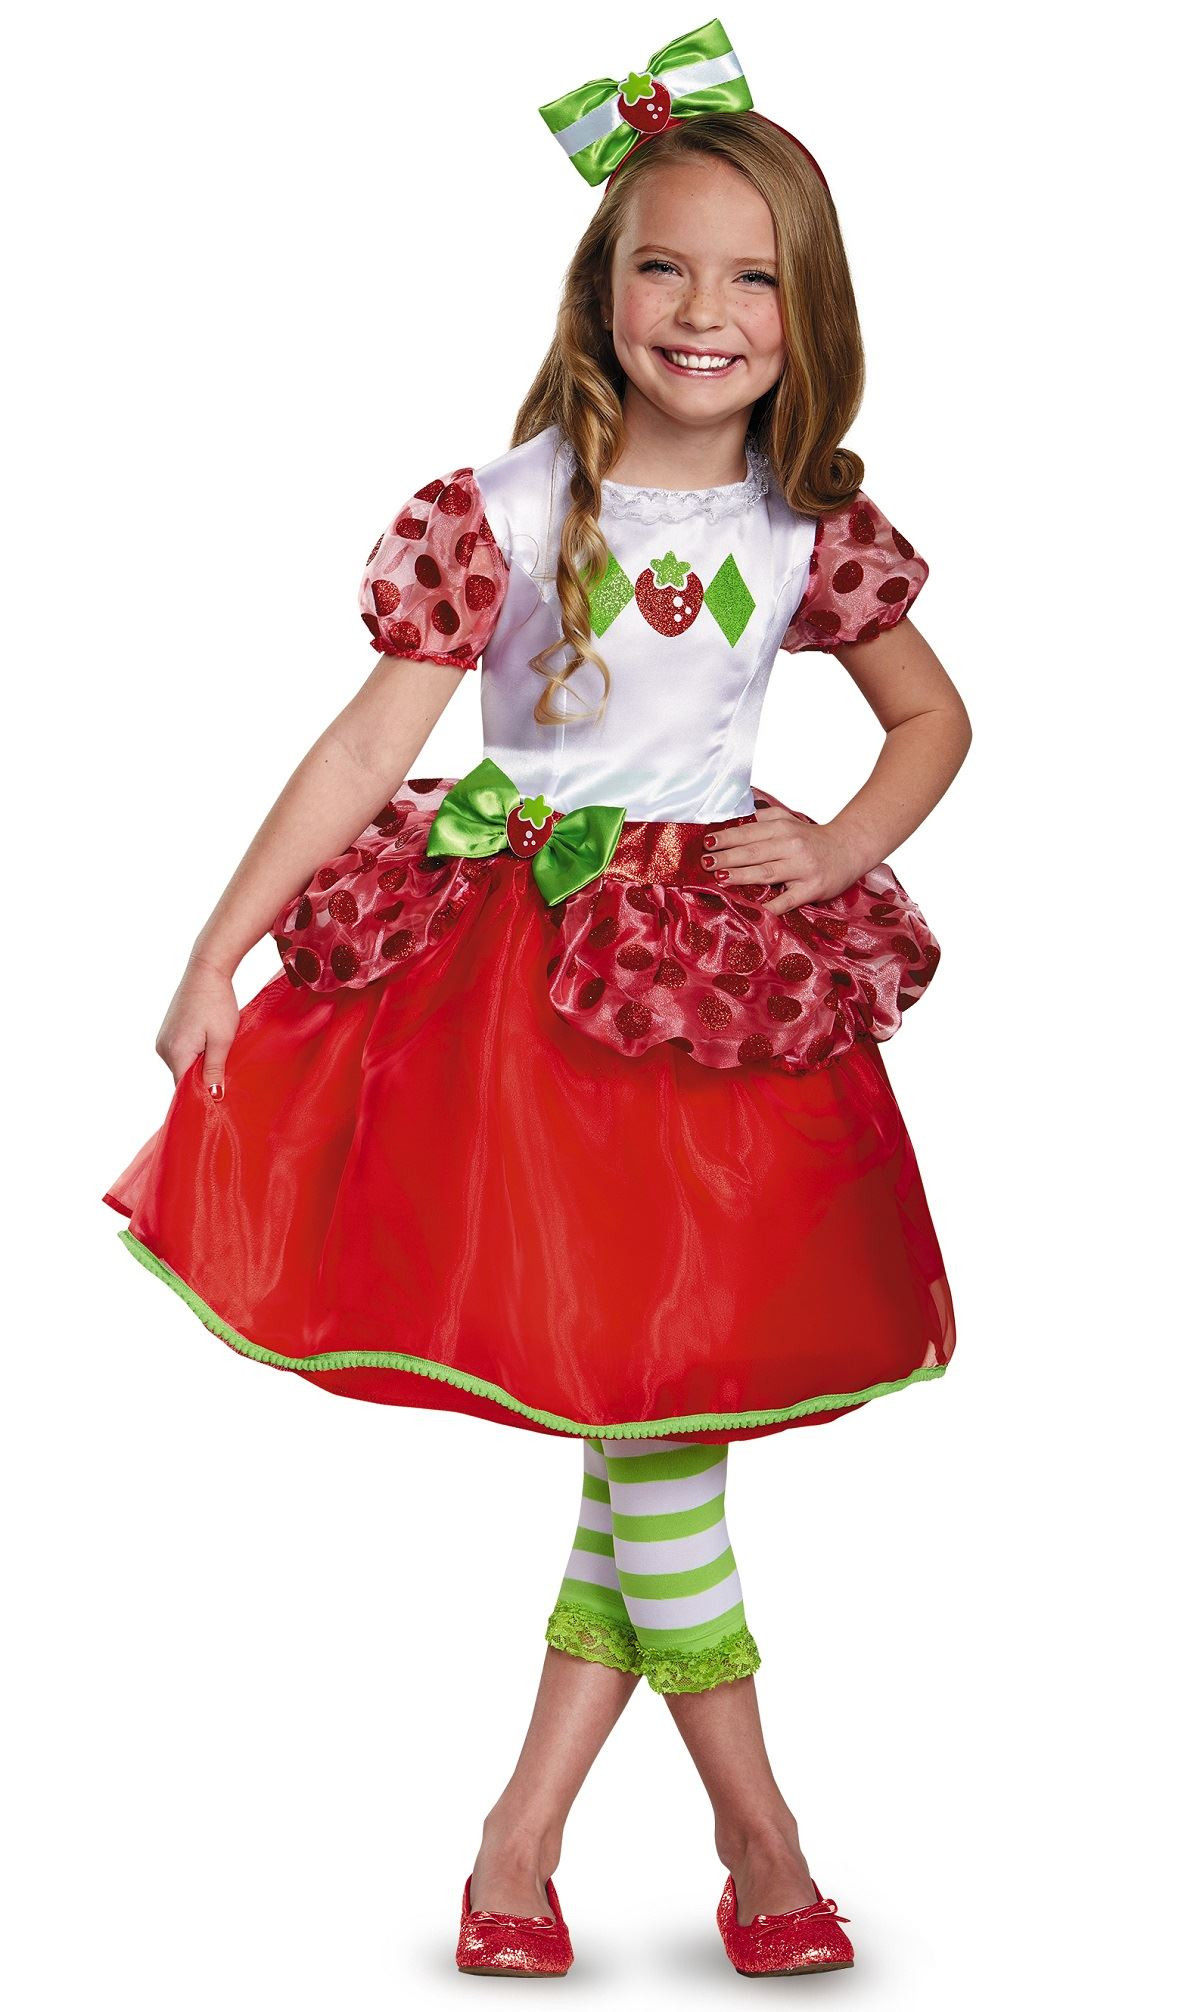 Strawberry Shortcake Halloween Costume
 Kids Strawberry Shortcake Girls Costume $37 99